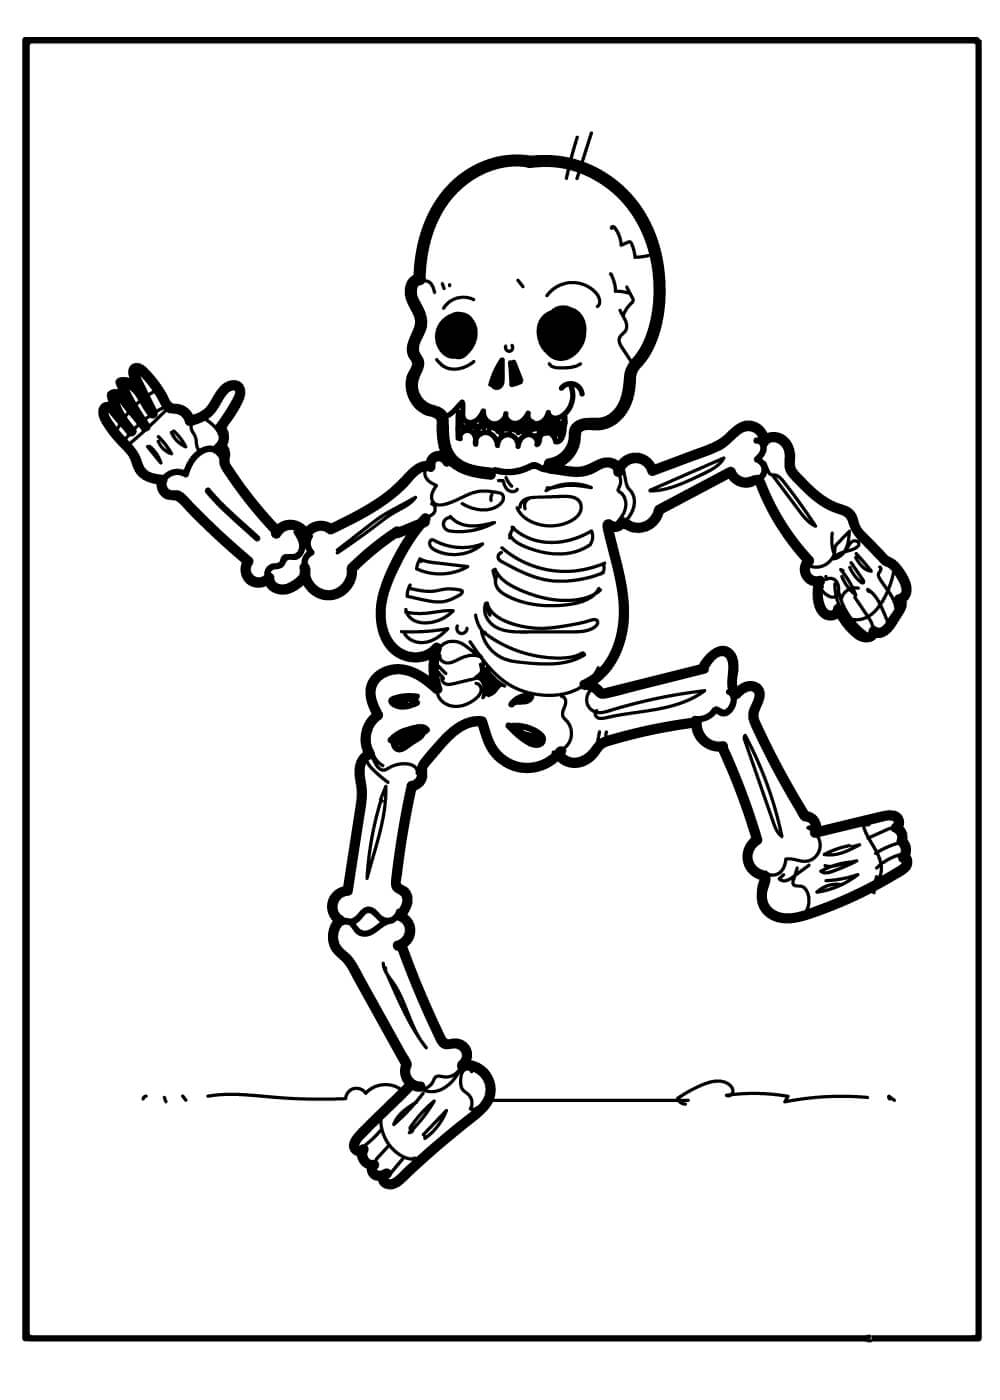 Esqueleto Divertido para colorear, imprimir e dibujar –